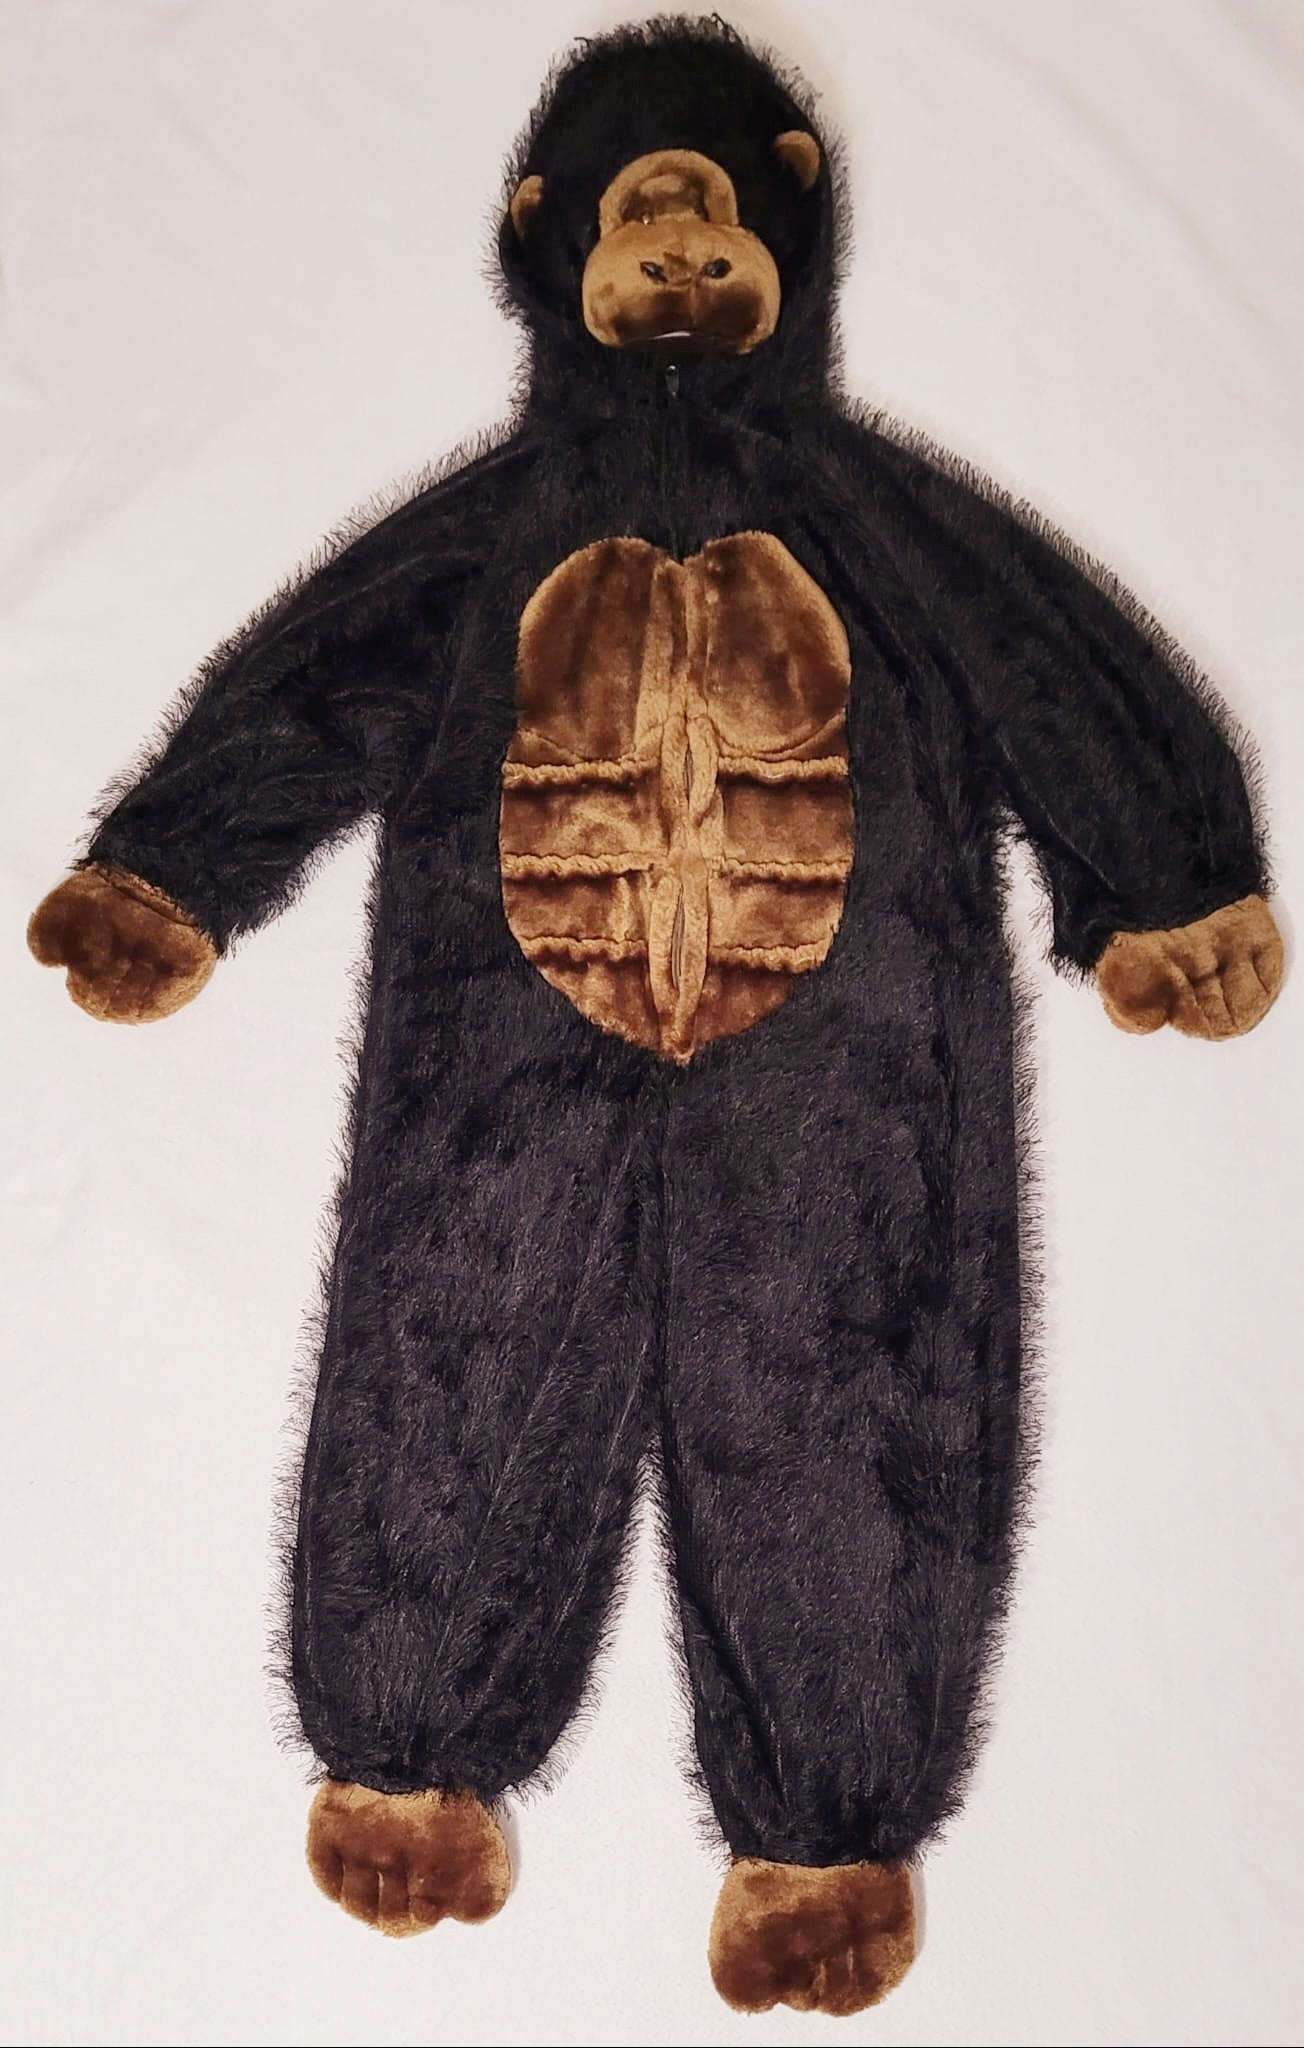 Child's "APE GORILLA" Full Body Halloween Costume (Size 47")